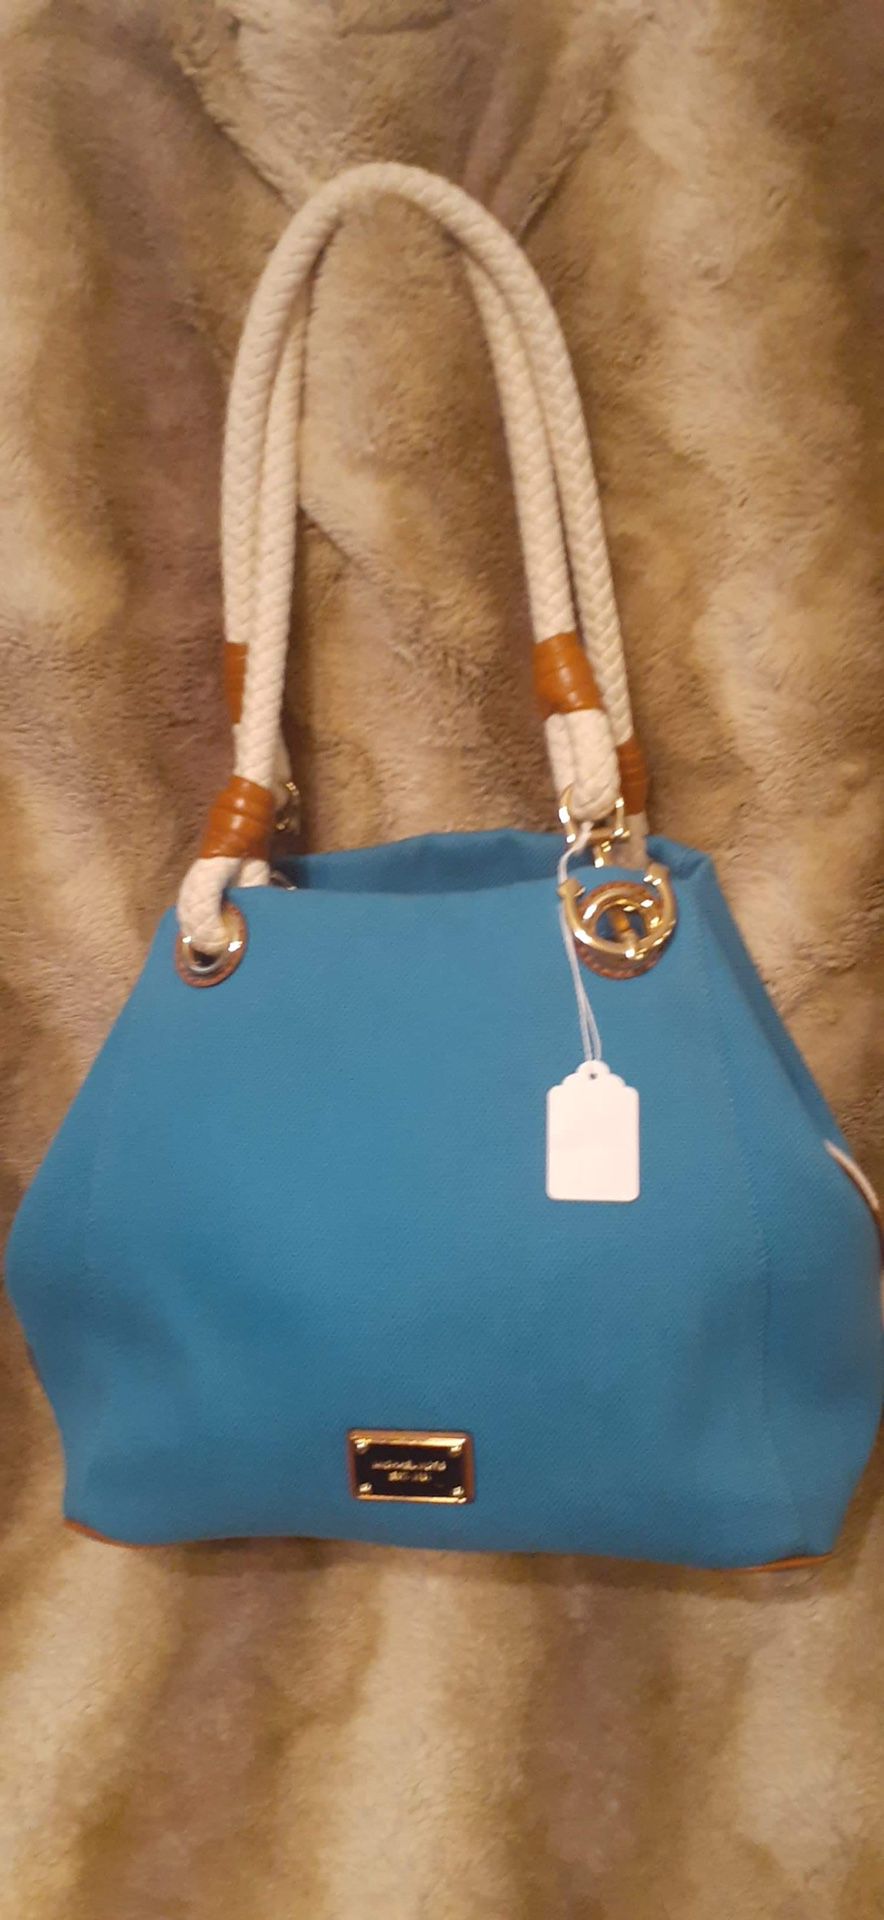 New Authentic Michael Kors Marina Summer Blue Canvas Tote/Bag